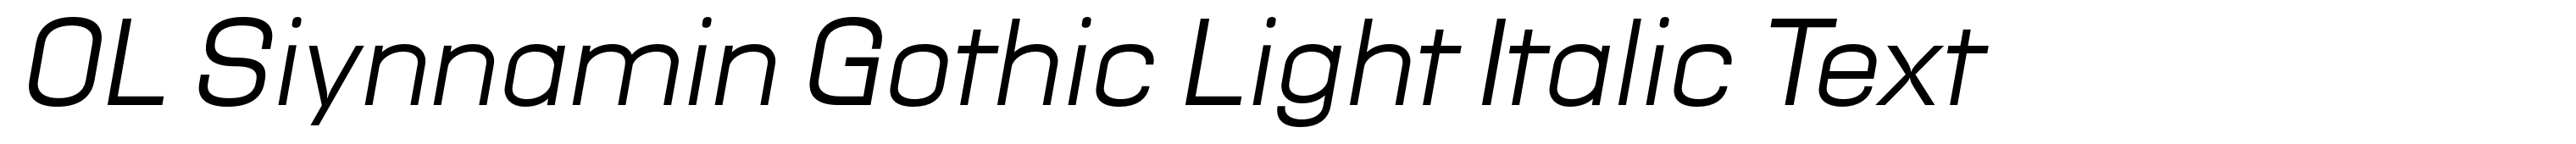 OL Siynnamin Gothic Light Italic Text